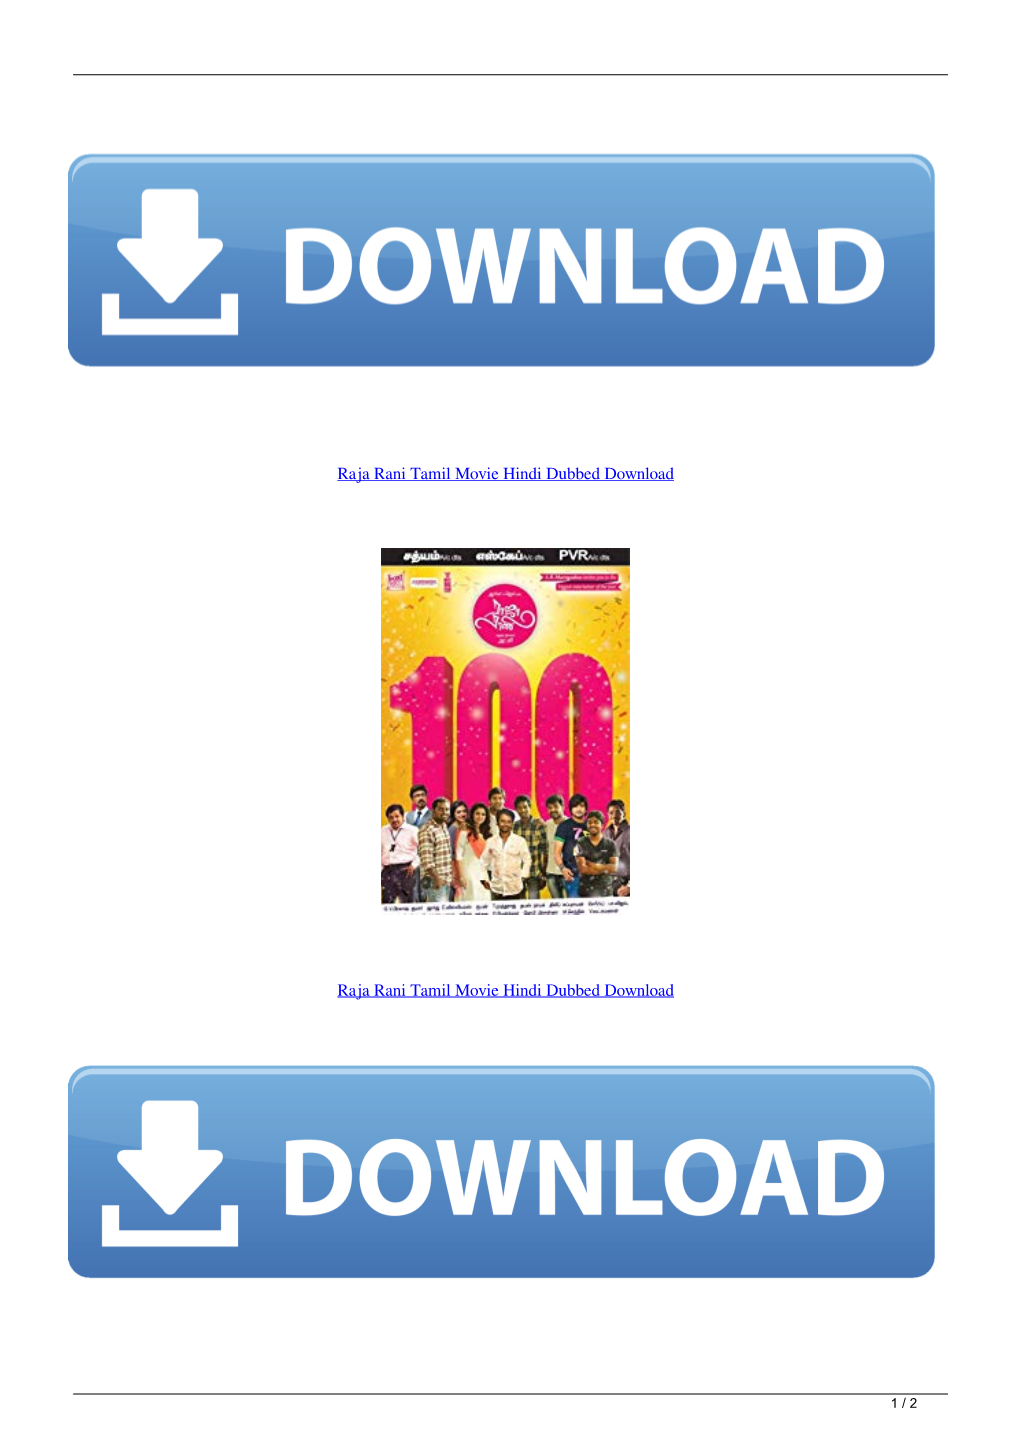 Raja Rani Tamil Movie Hindi Dubbed Download